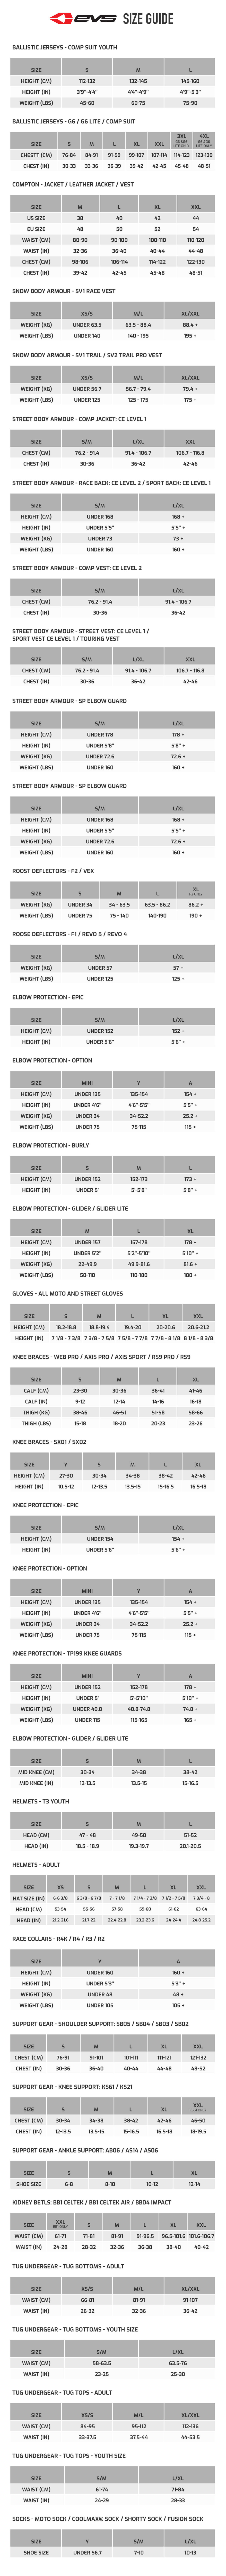 Evs Helmet Size Chart